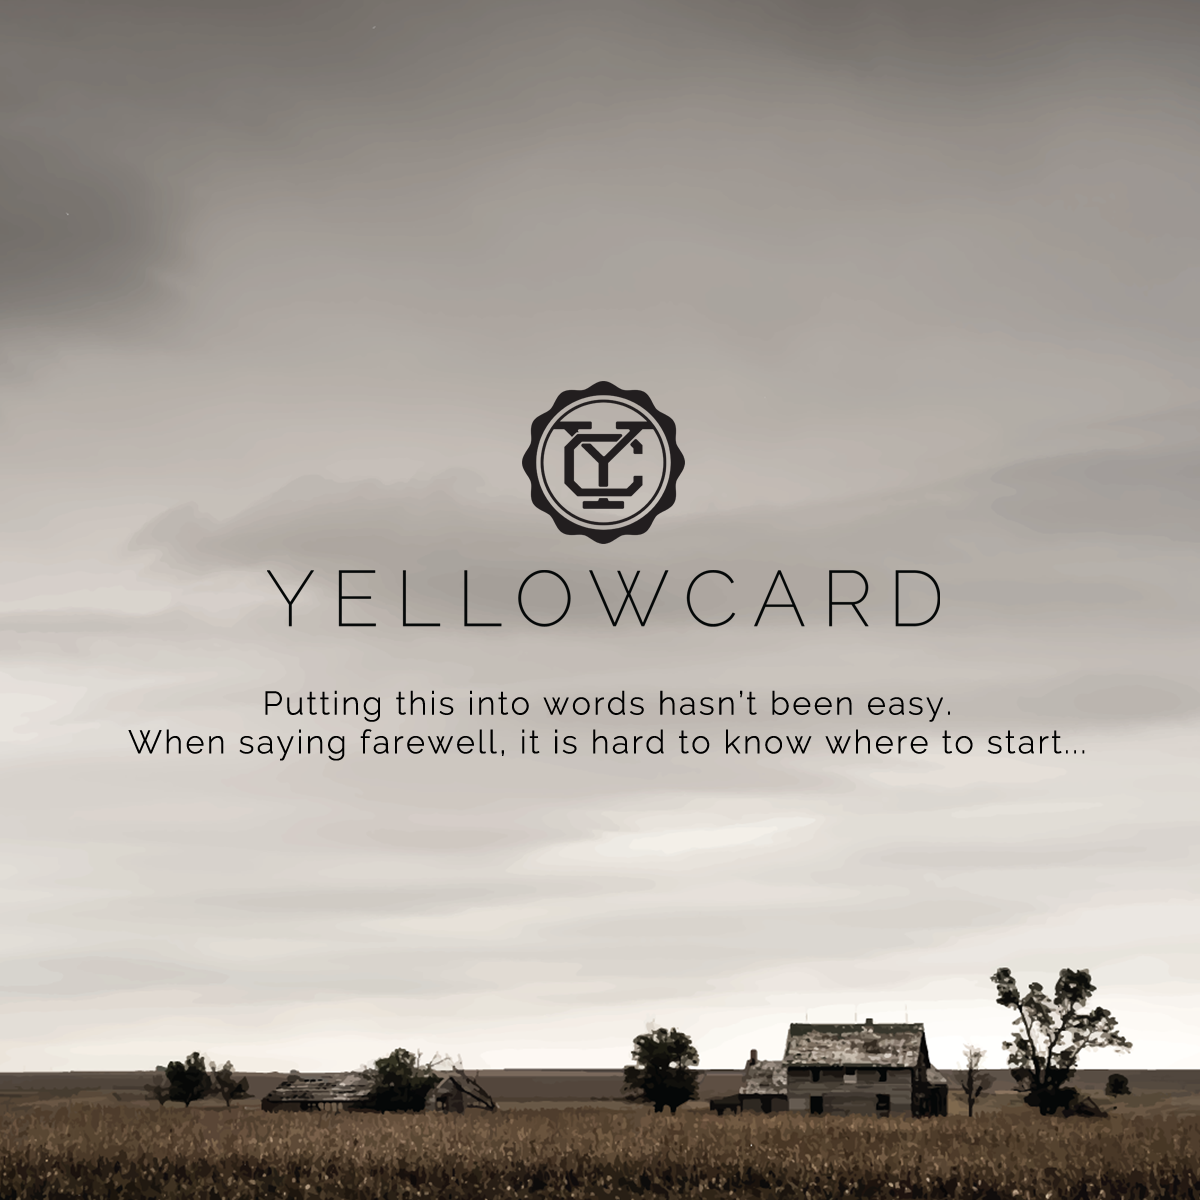 Band Yellowcard Bid Farewell, Fans React with Heartfelt Messages